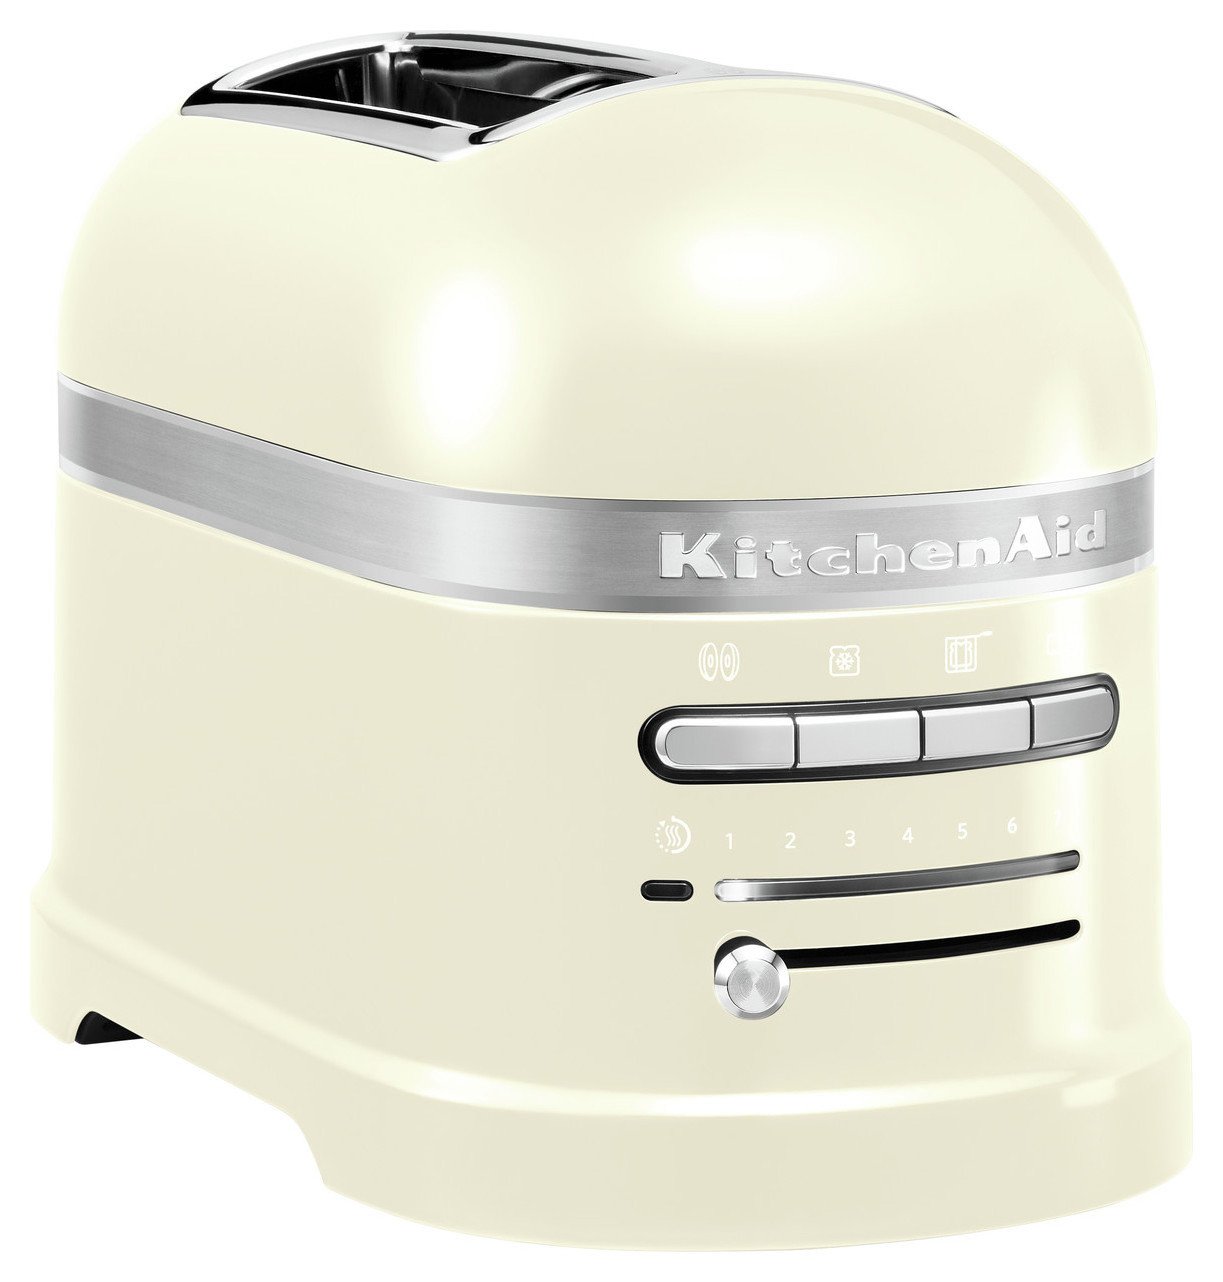 KitchenAid 5KMT2204BAC Artisan 2 Slice Toaster - Cream